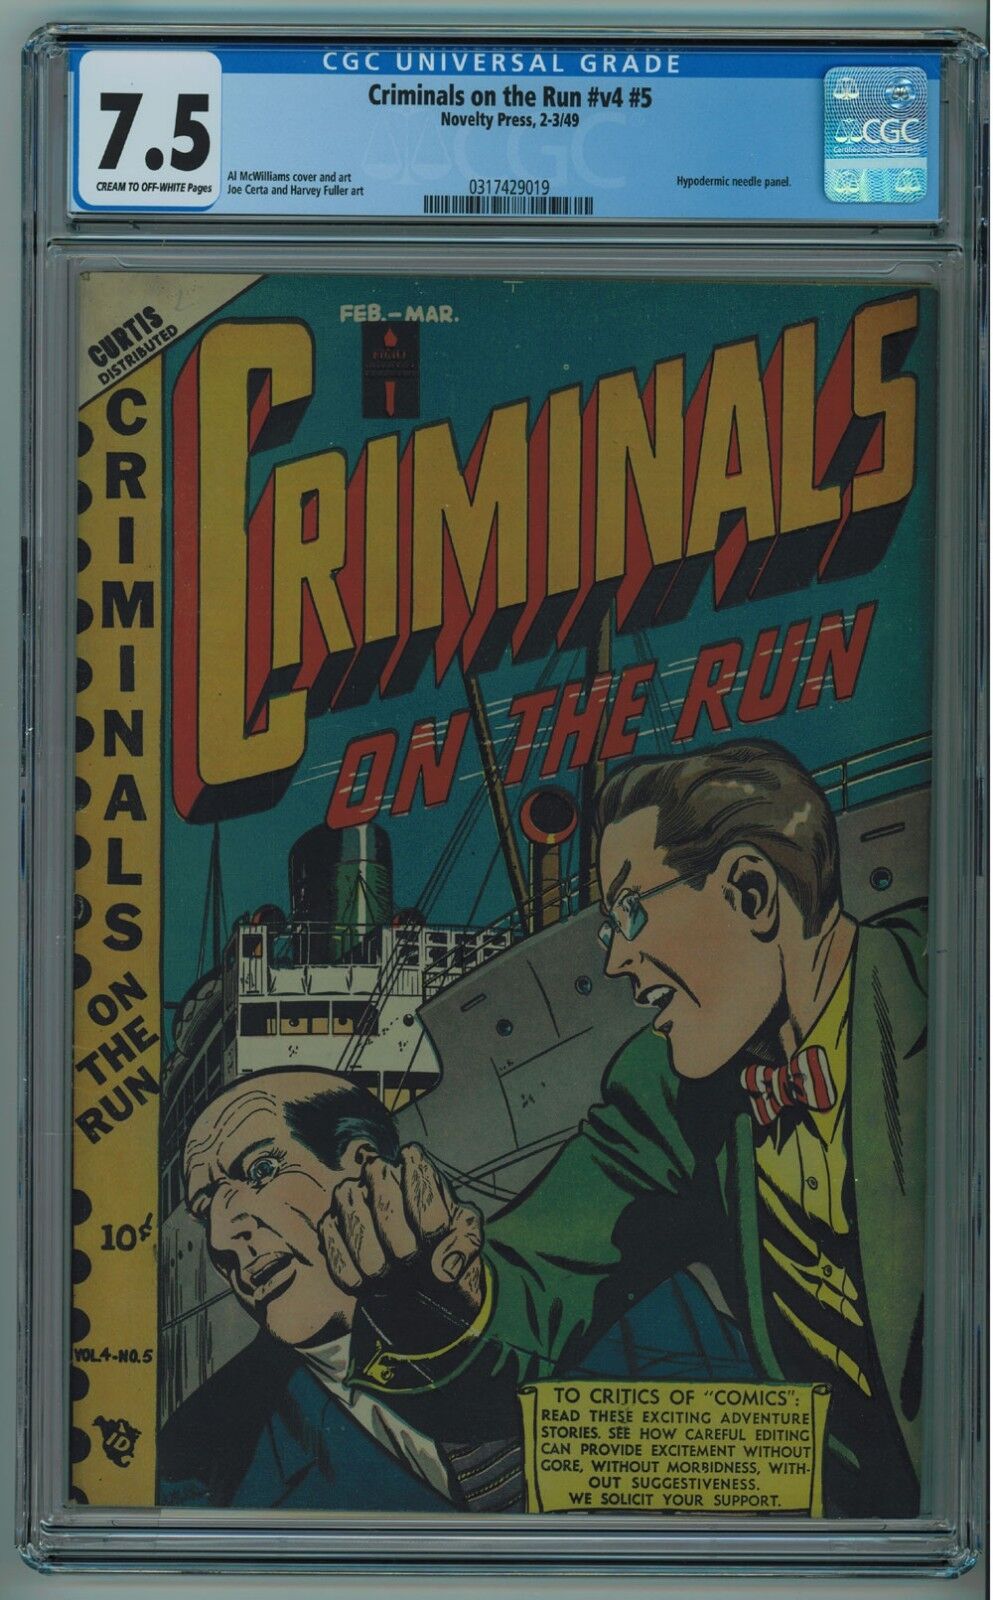 CRIMINALS ON THE RUN VOL. 4 #5 CGC 7.5 2ND BEST CGC COPY CR/OW PGS 1949